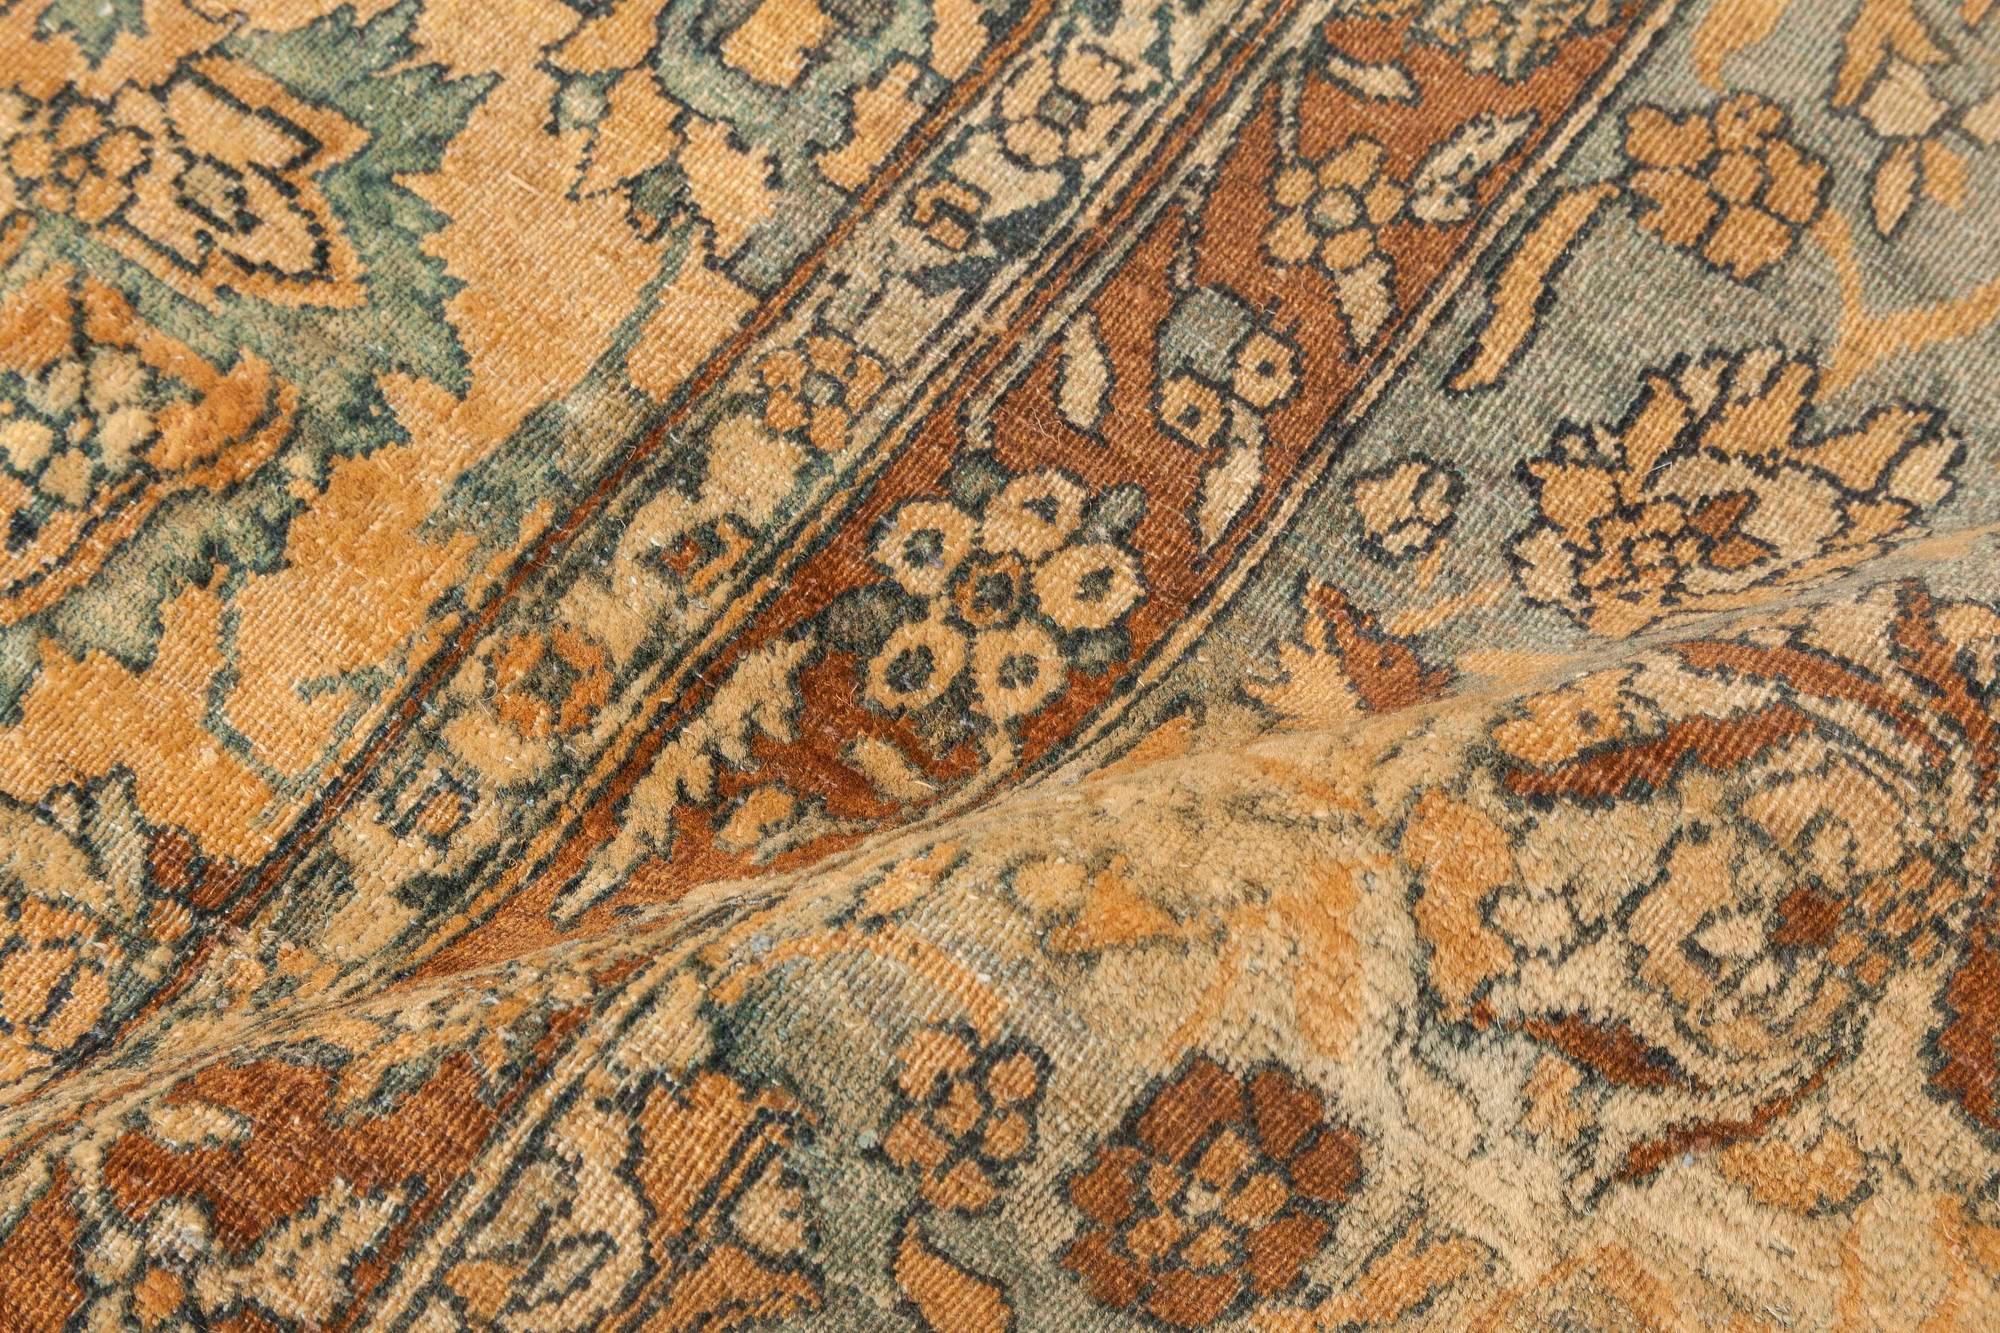 Antique Persian Kirman Botanic Handmade Wool Rug
Size: 13'6